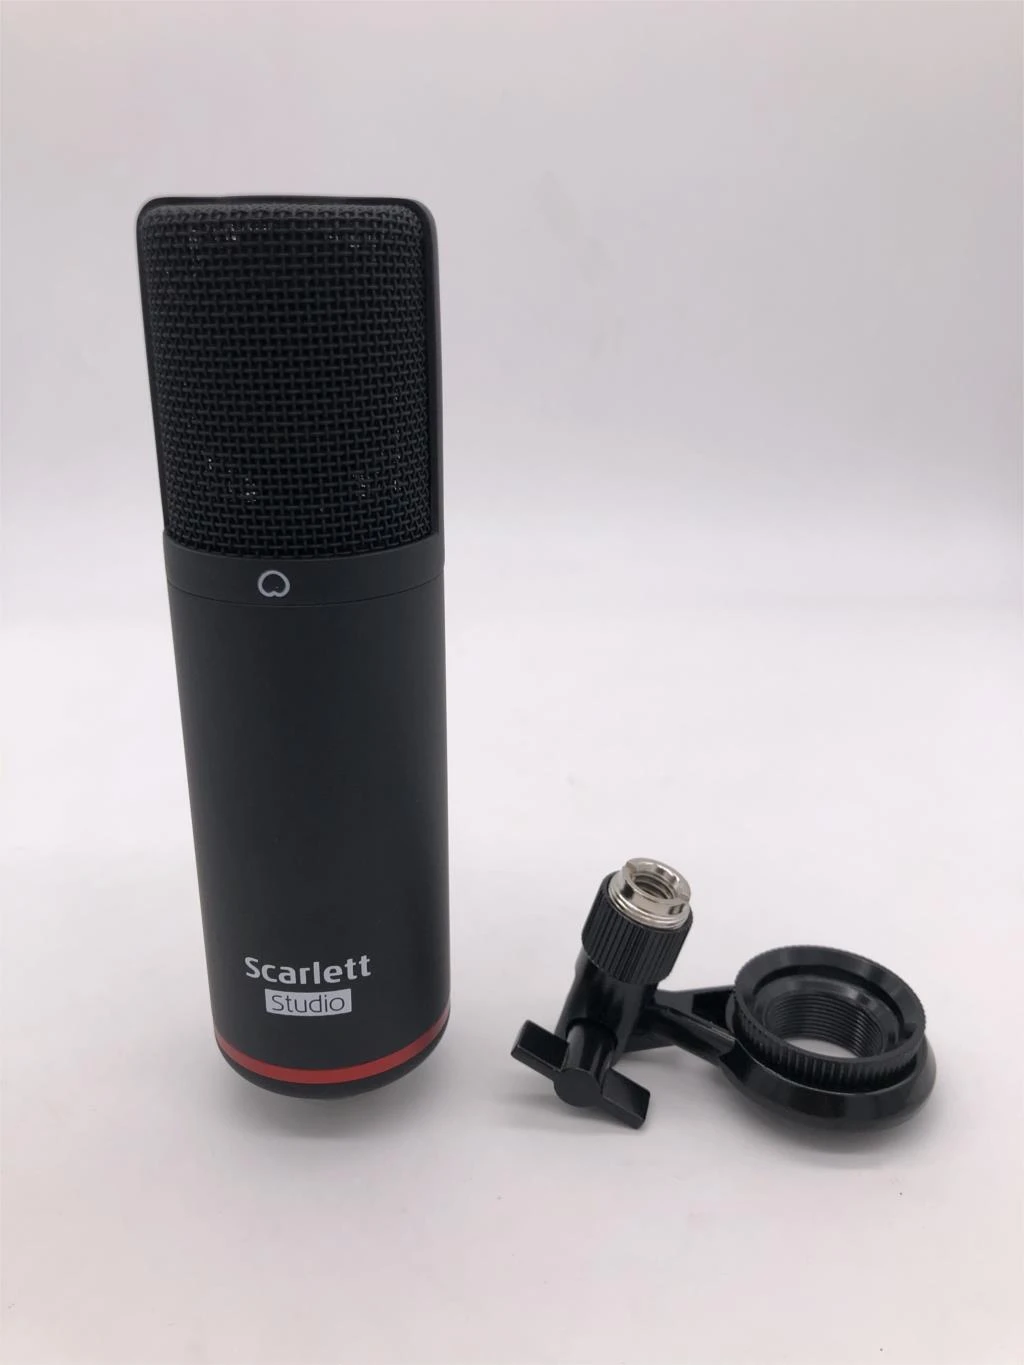 Hot Focusrite Scarlett Studio Scarlett CM25 MkIII Condenser Microphone  Studio quality For Computer Recording, with 3m XLR Cable|Míc| - AliExpress